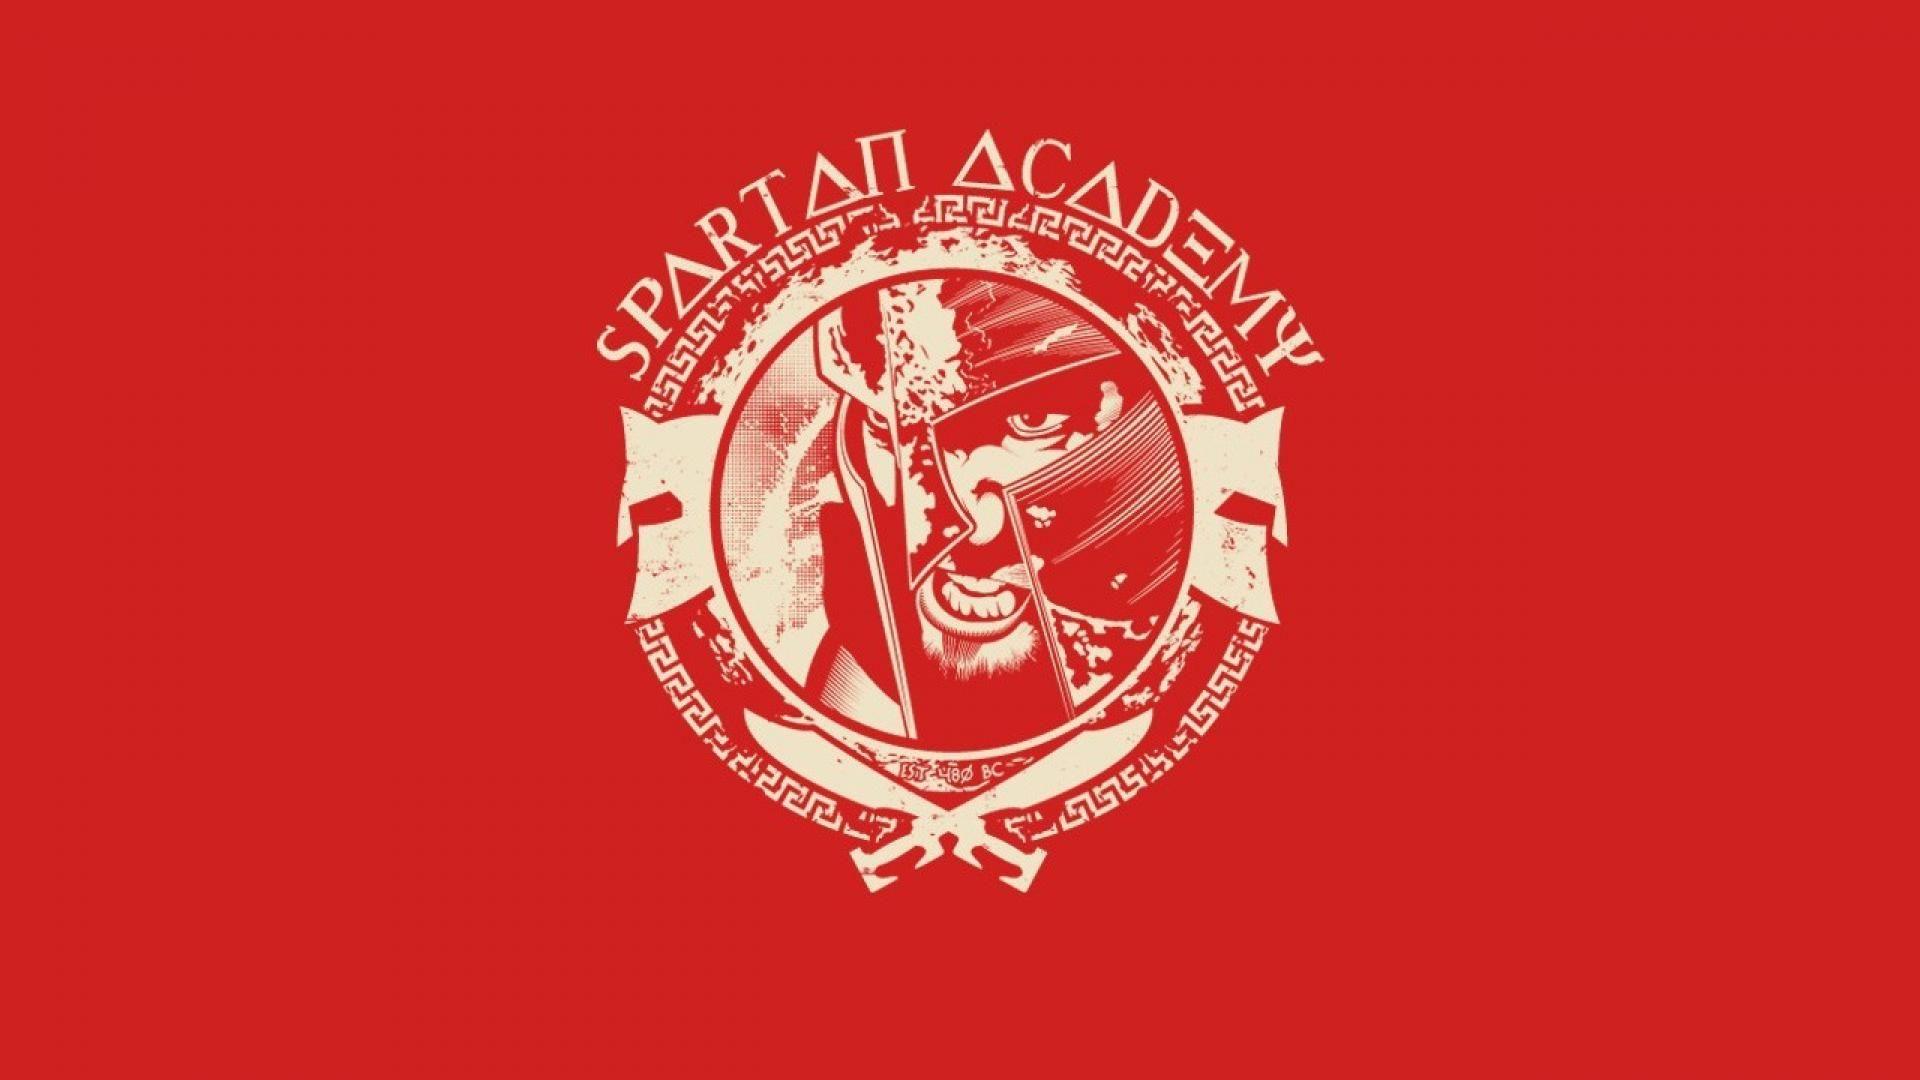 (movie) spartan academy wallpaper